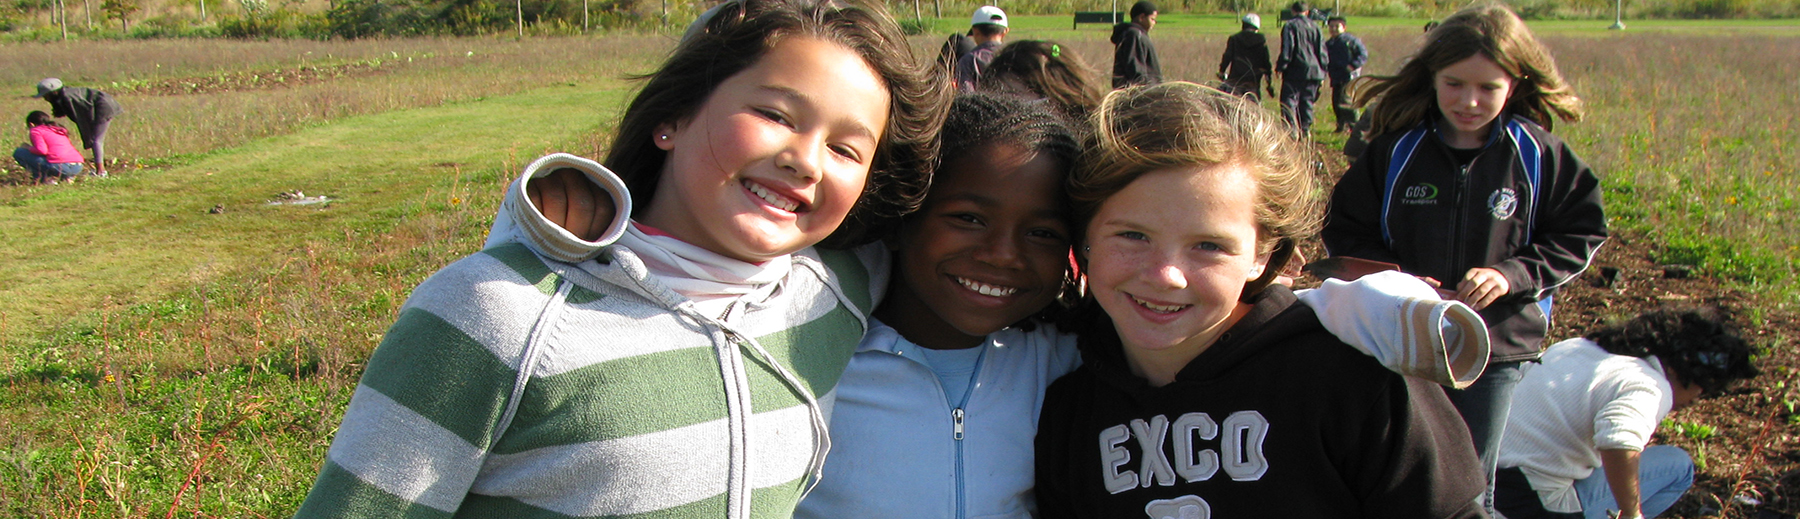 Three young girls on a school field trip